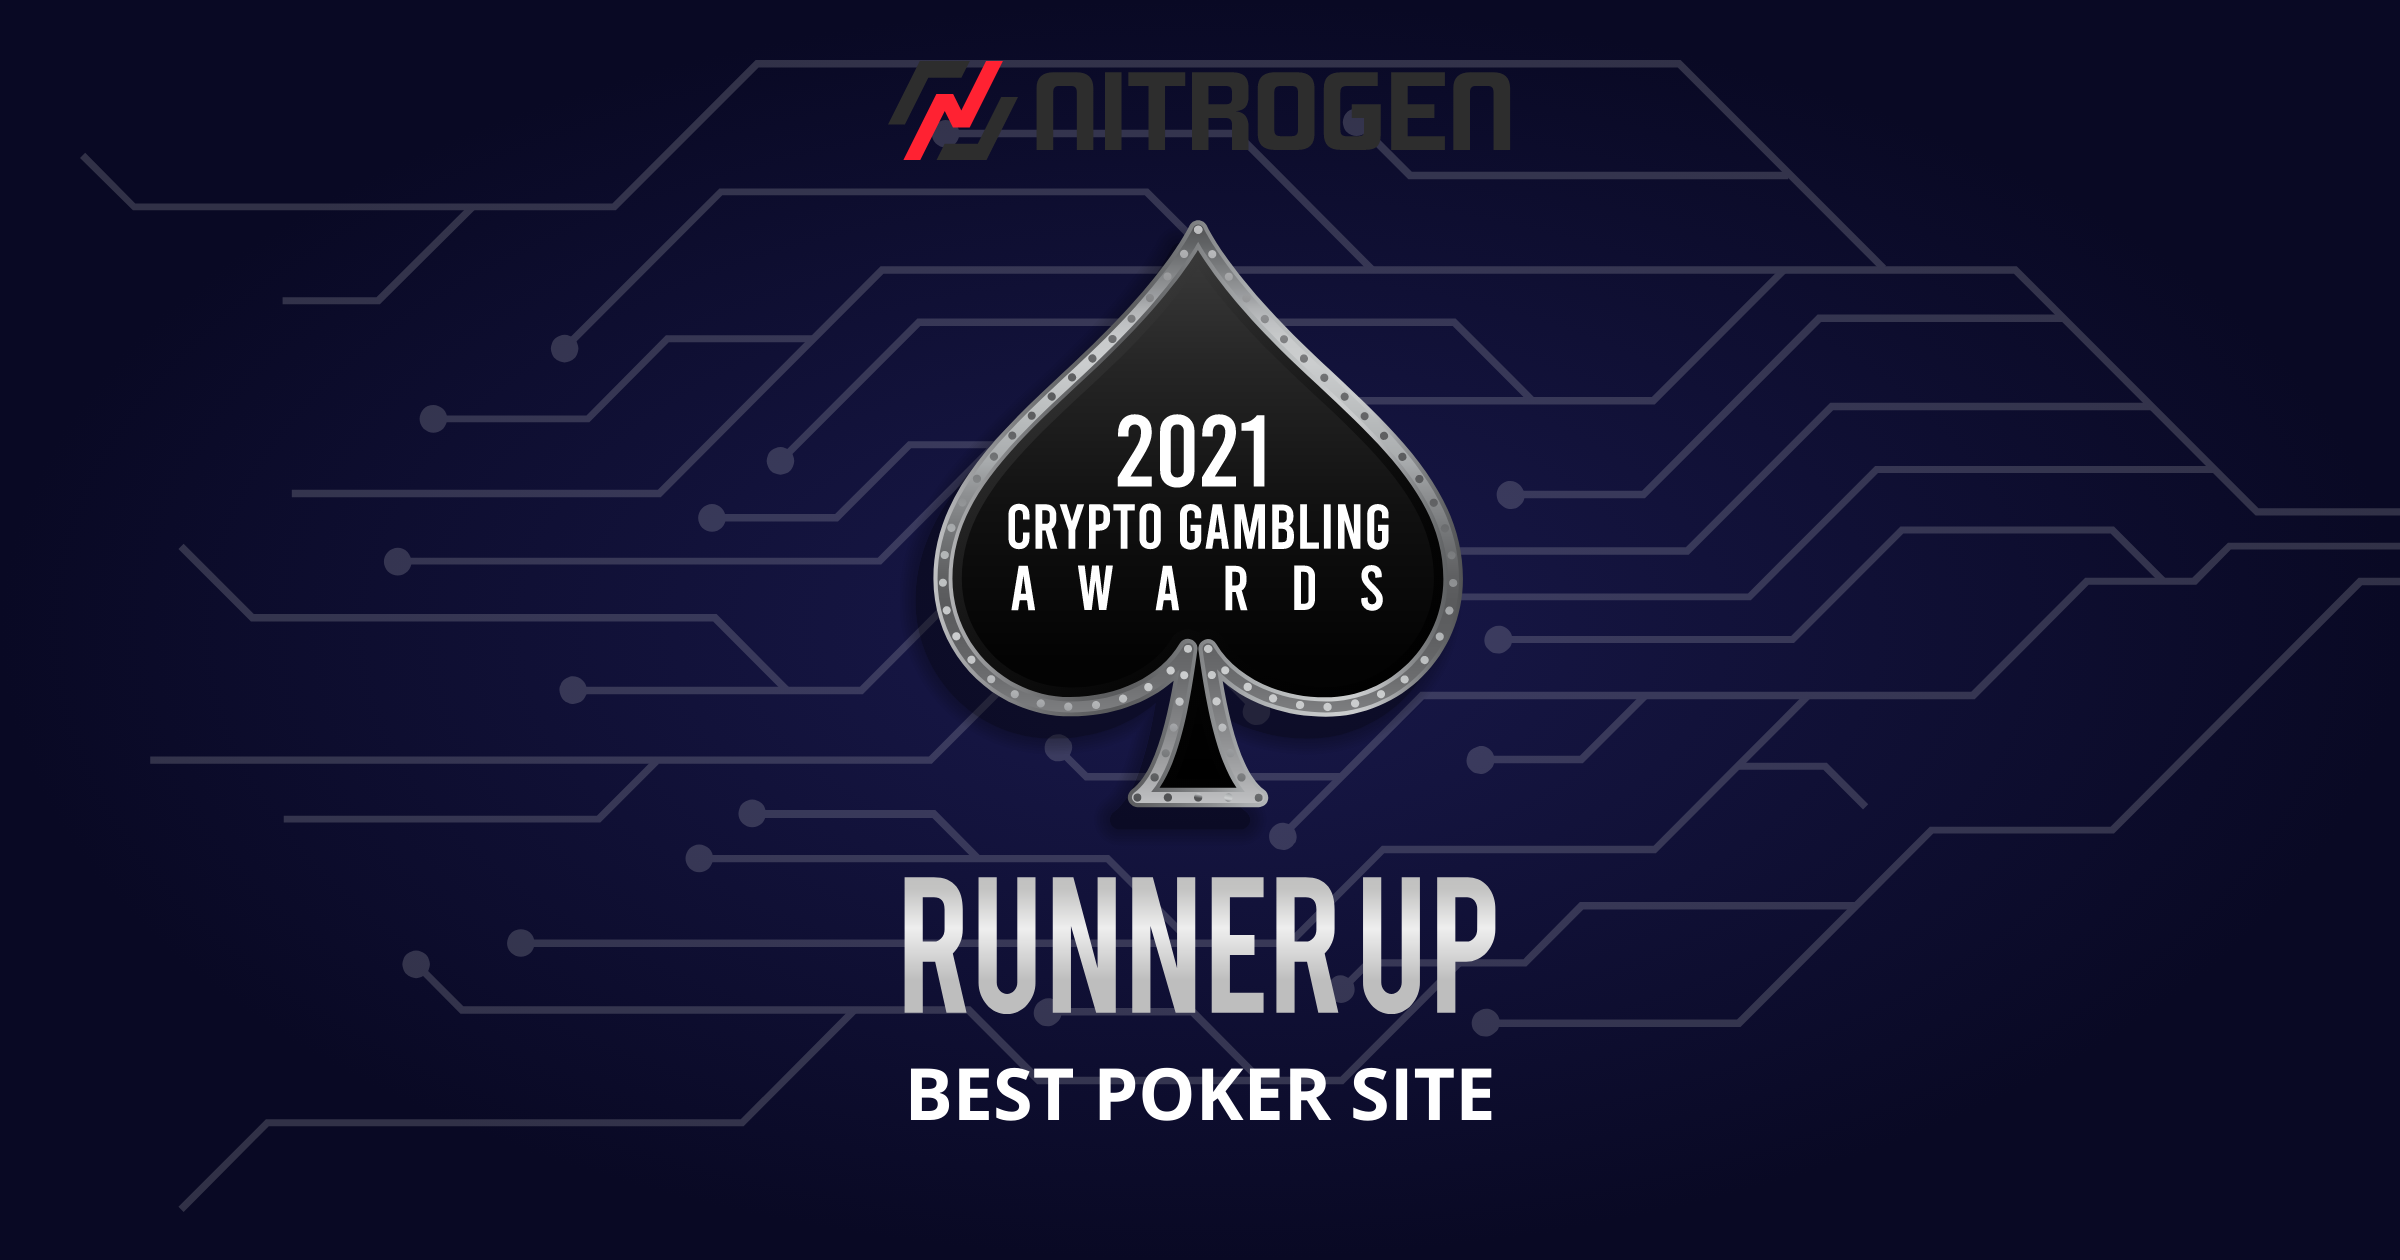 Crypto Gambling Awards won by Nitrogen